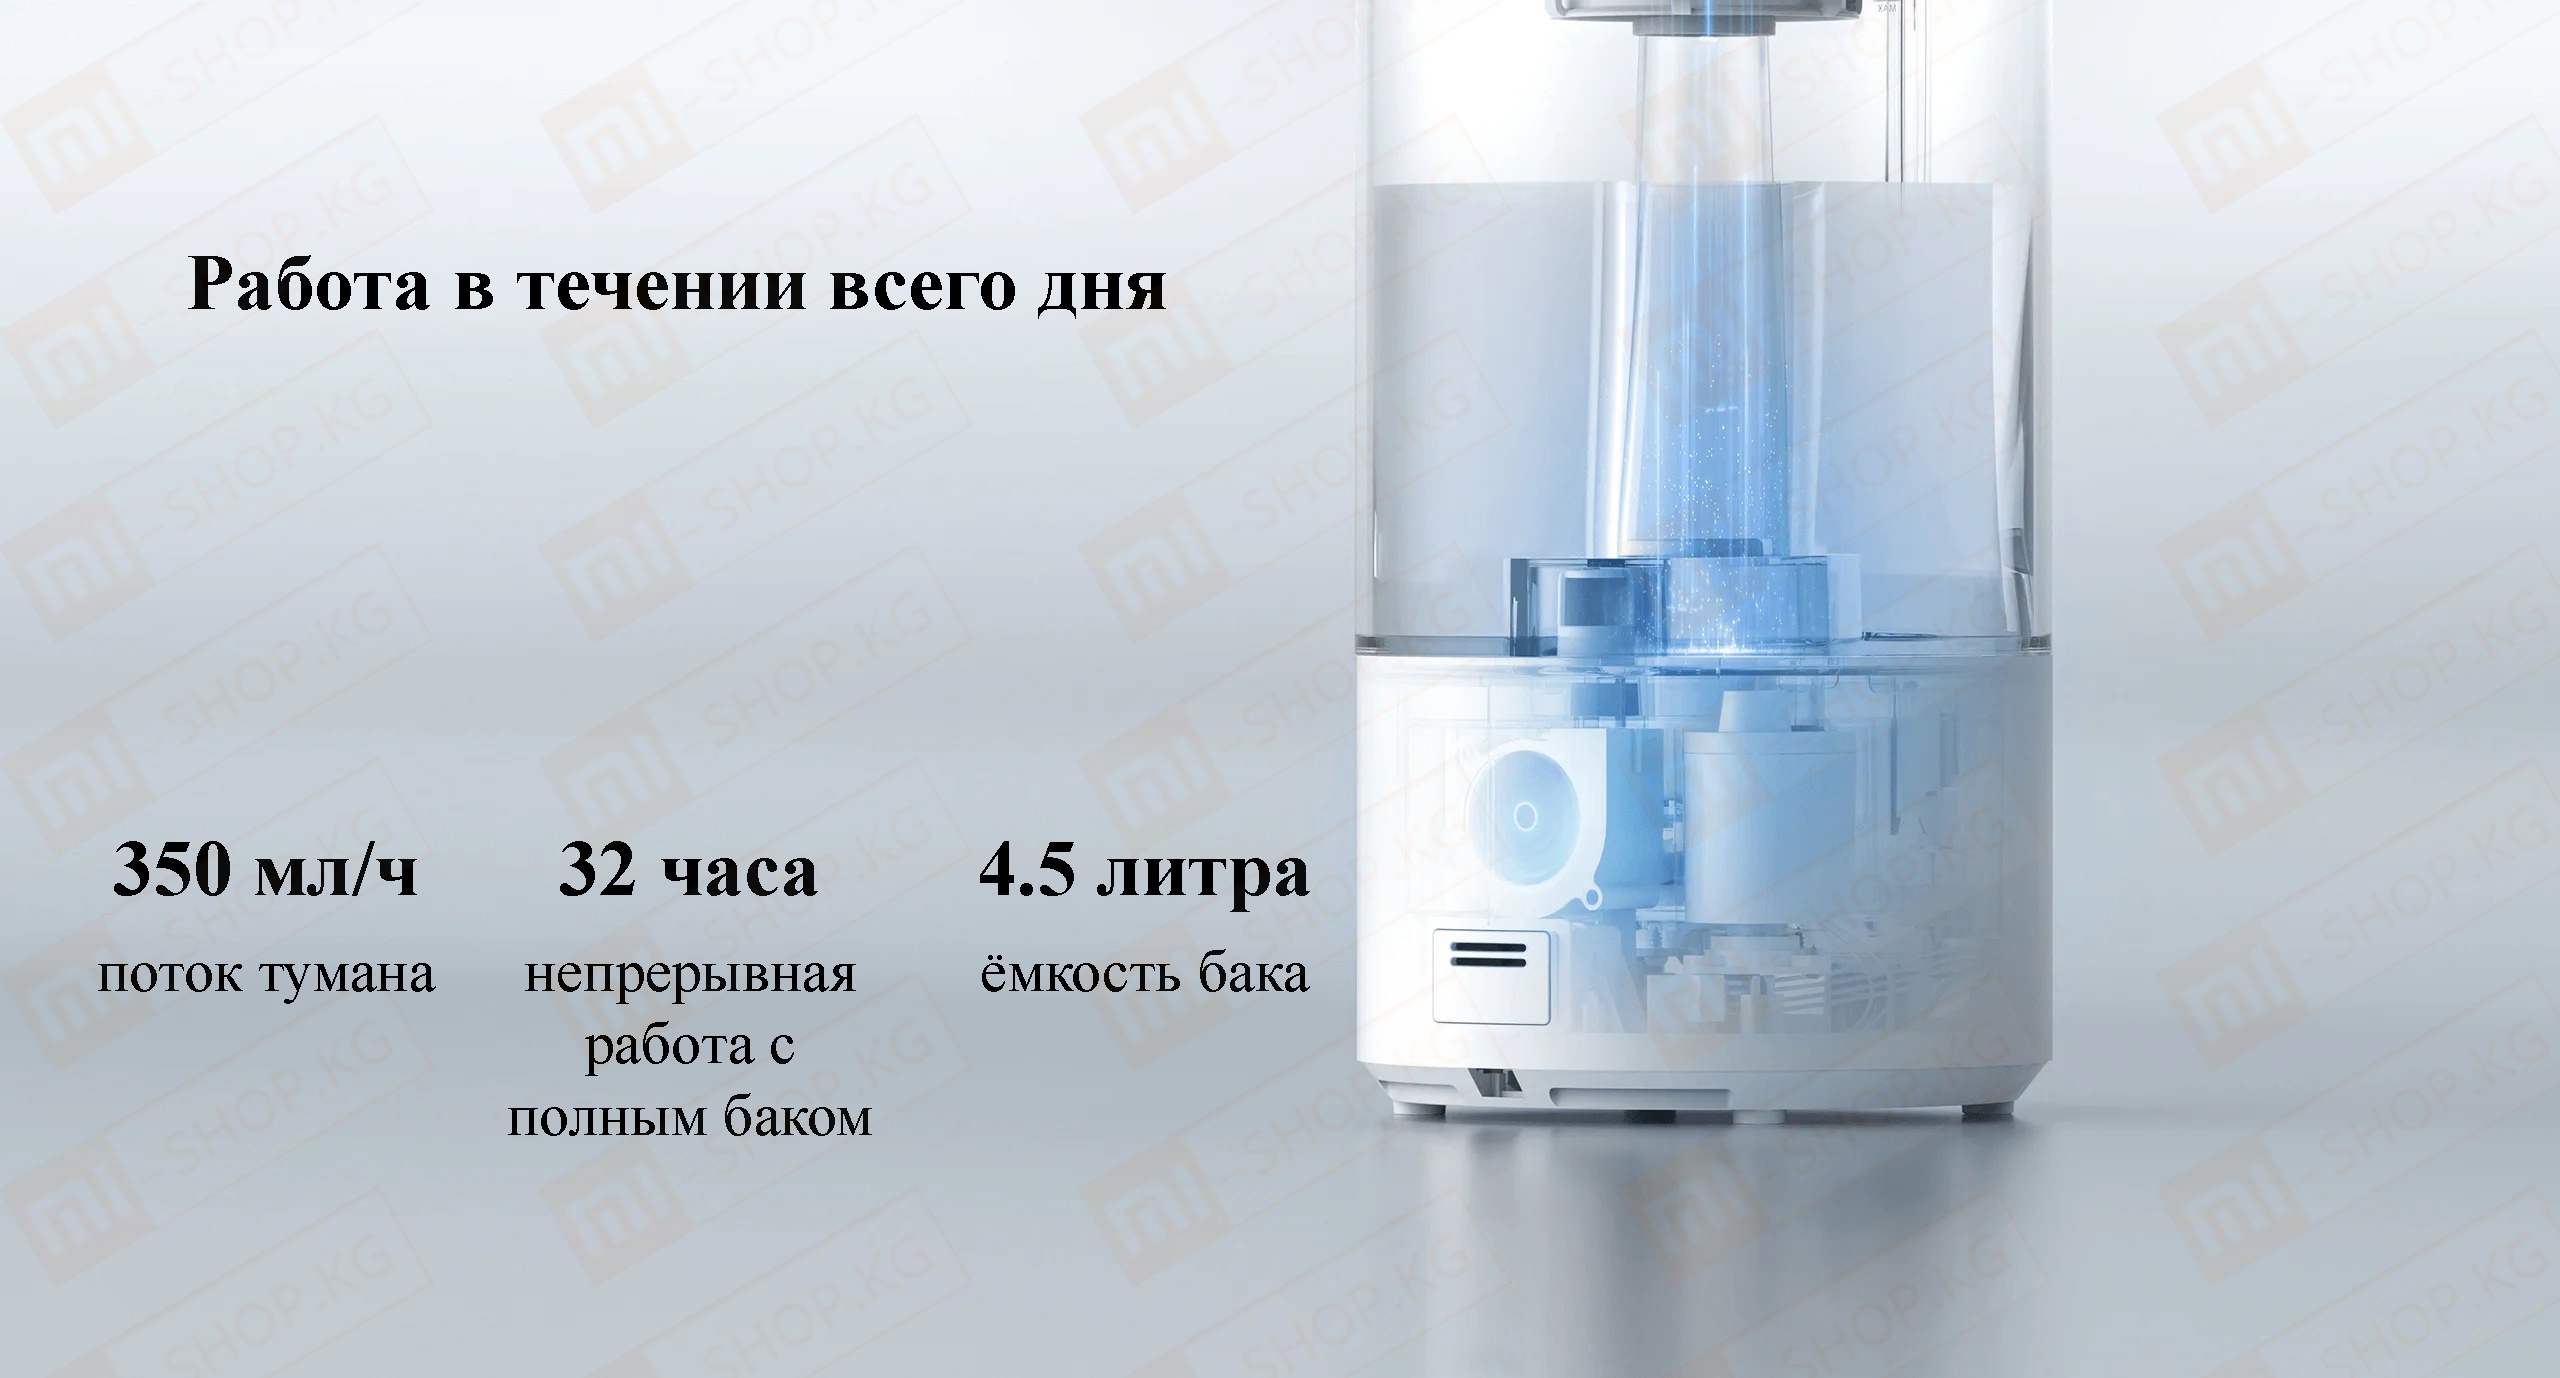 Увлажнитель воздуха Xiaomi Smart Sterilization Humidifier 2